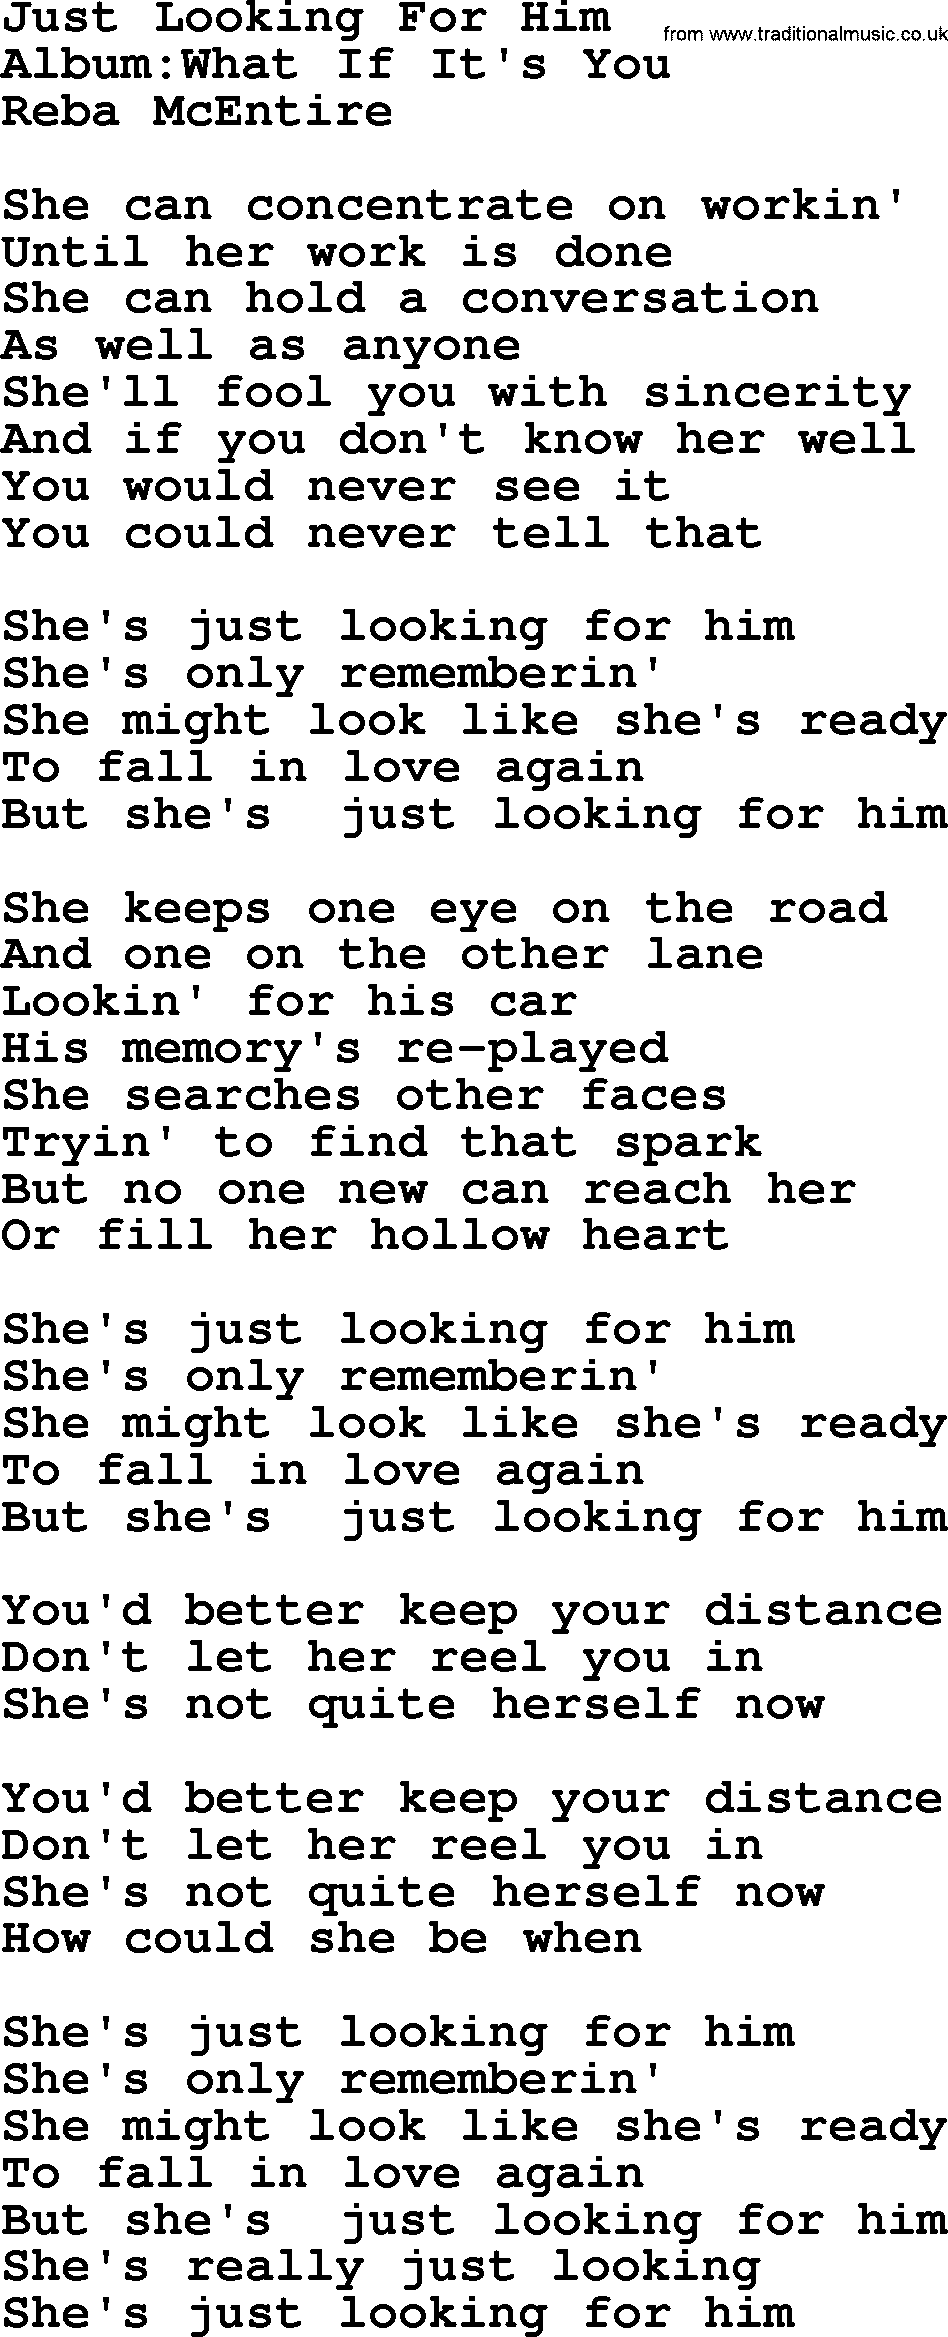 Reba McEntire song: Just Looking For Him lyrics